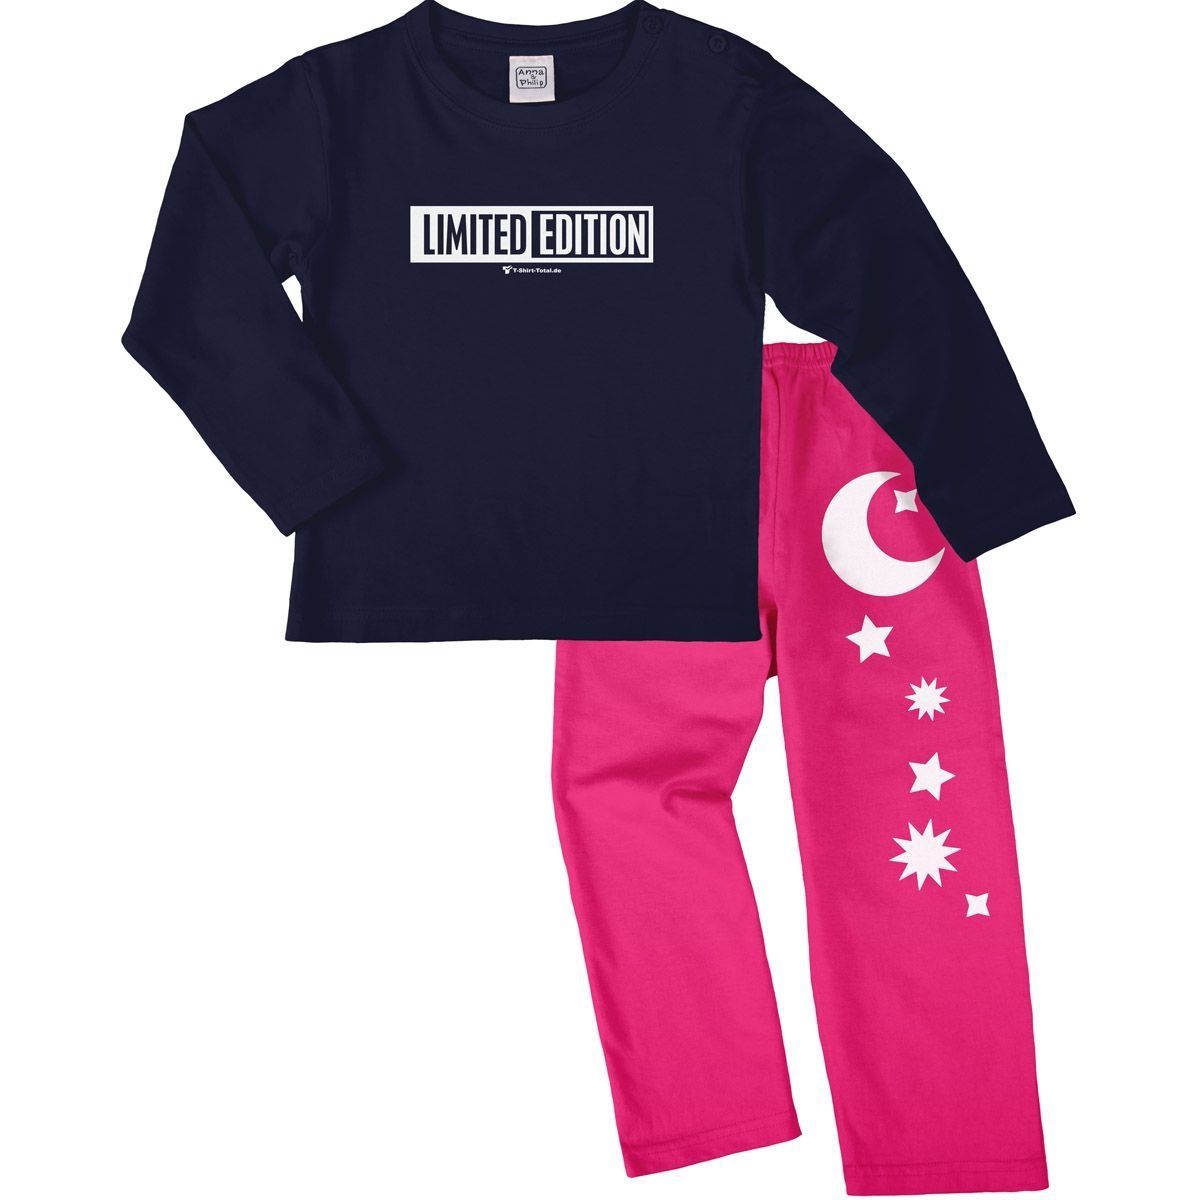 Limited Edition Pyjama Set navy / pink 80 / 86